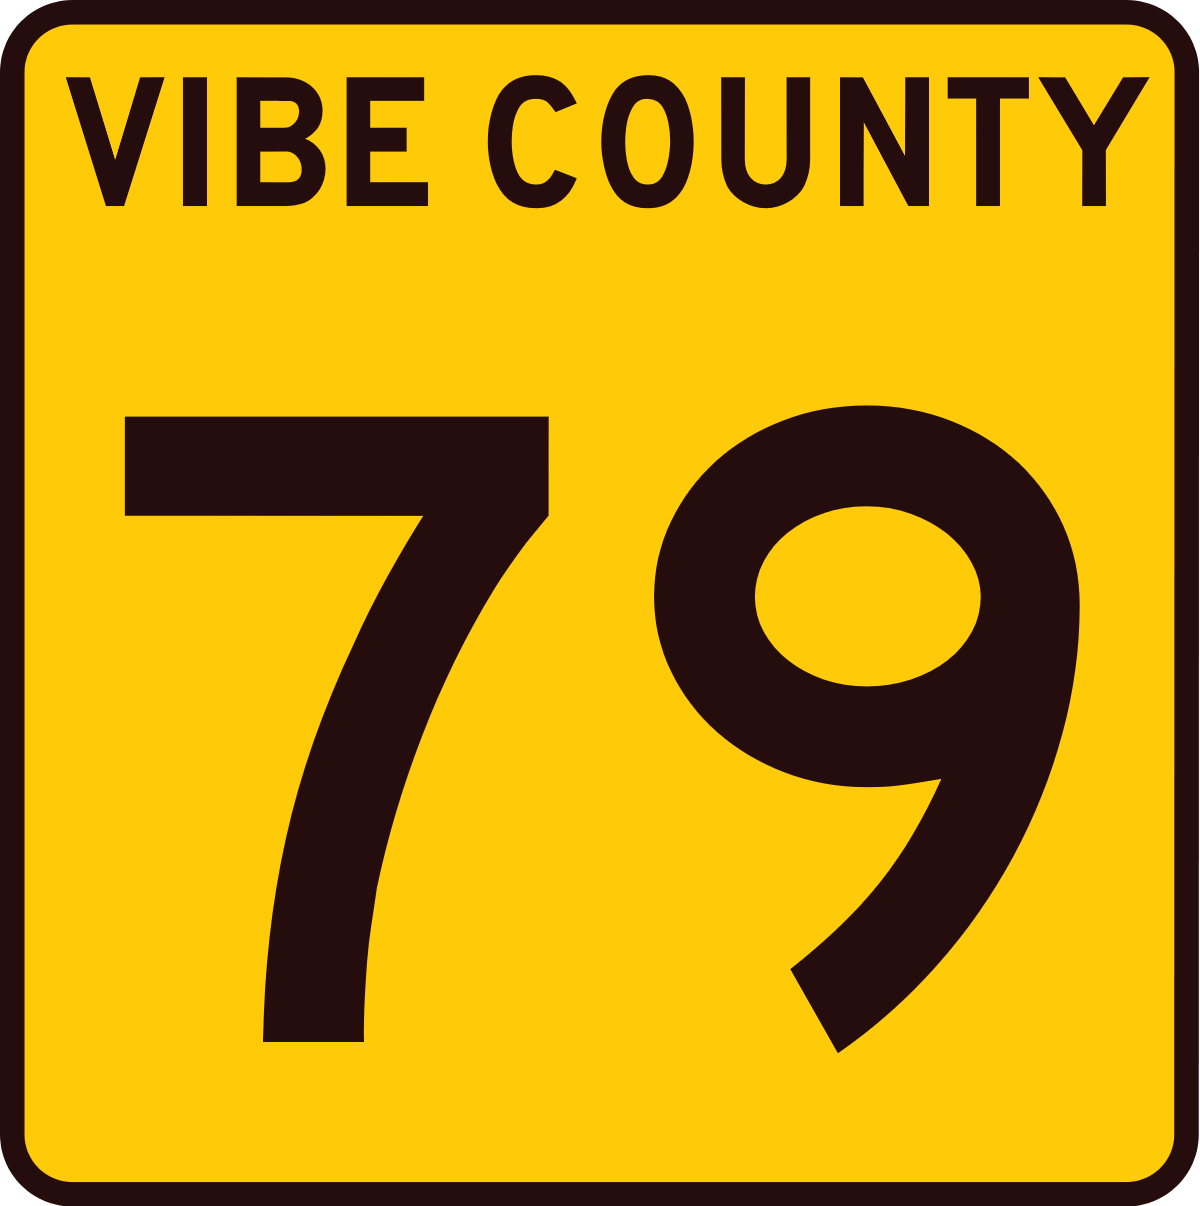 Vibe County Highway 79 Shield